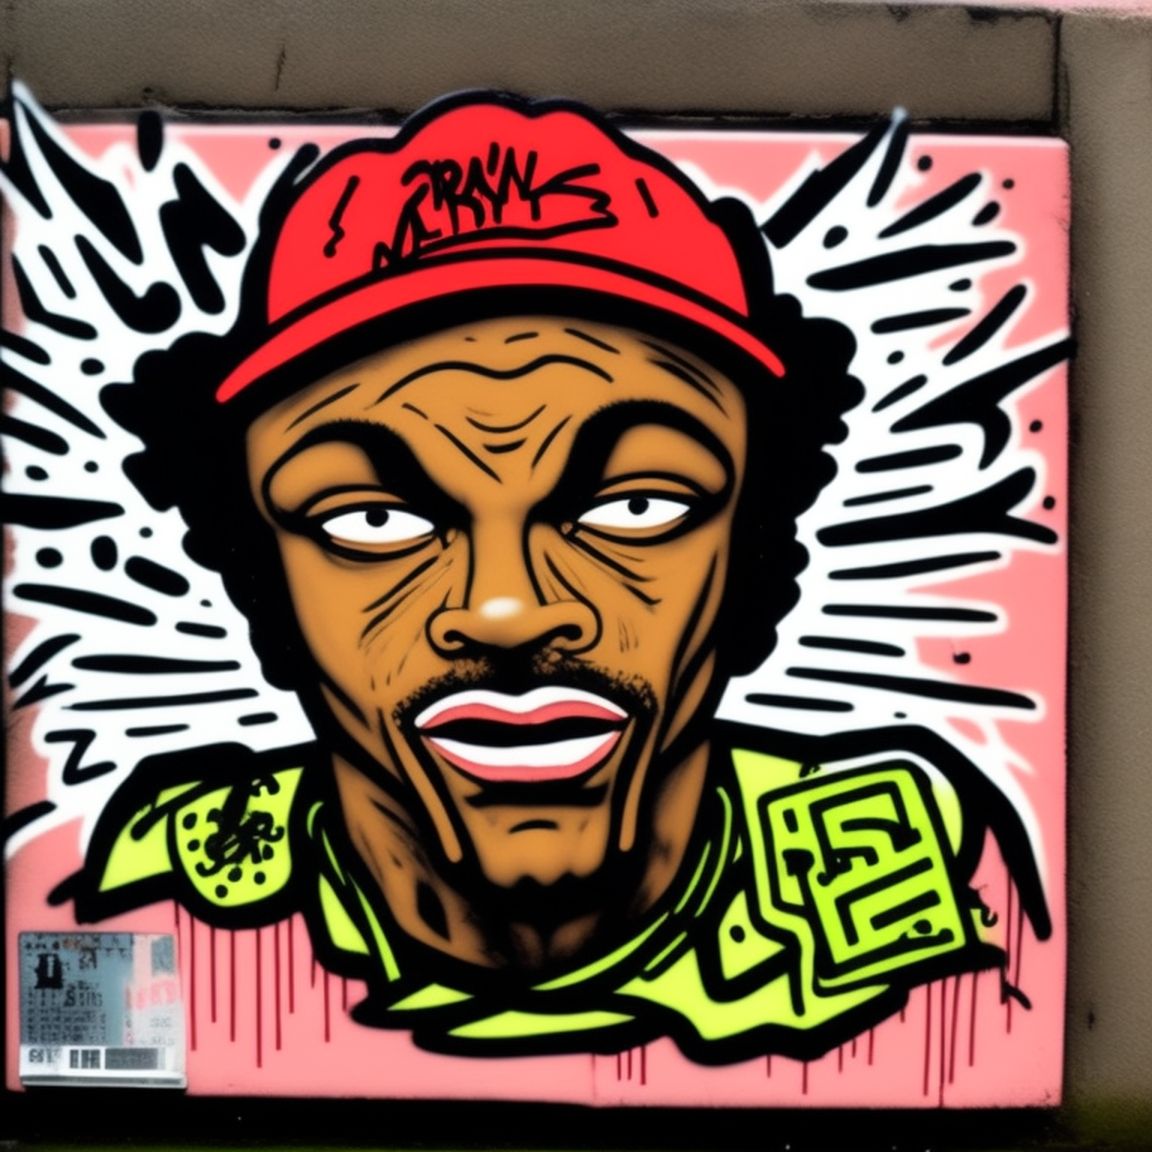 ((Subject)), Graffiti, Spraypaint, Marker, Graffiti tag, On a wall, Tagging, Street art, Spraycan, Subway art, Hip hop, Darryl McCray, Chris Ellis, Dondi White, Keith Haring, Graffiti, Spraypaint, Marker, Graffiti tag, On a wall, Tagging, Street art, Spraycan, Subway art, Hip hop, Darryl McCray, Chris Ellis, Dondi White, Keith Haring